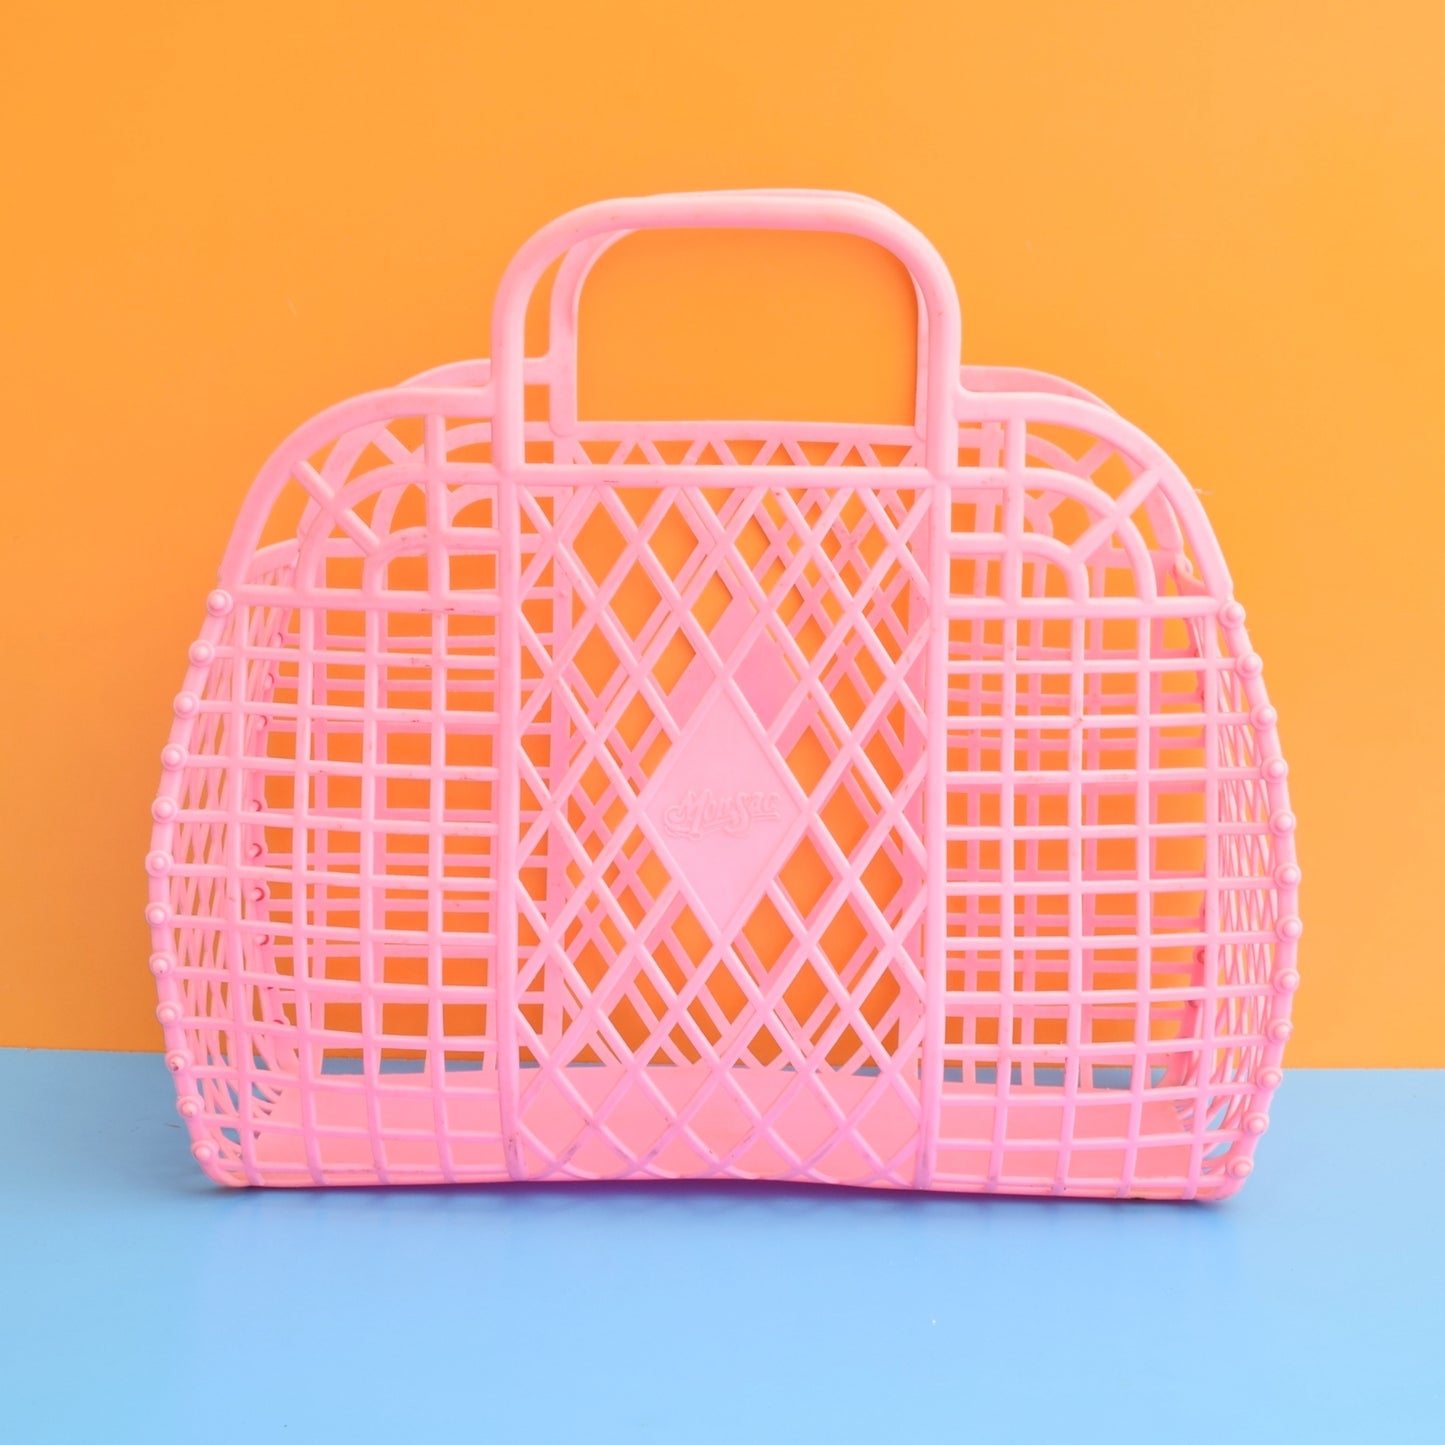 Vintage 1980s Plastic Jelly Bag - Pink